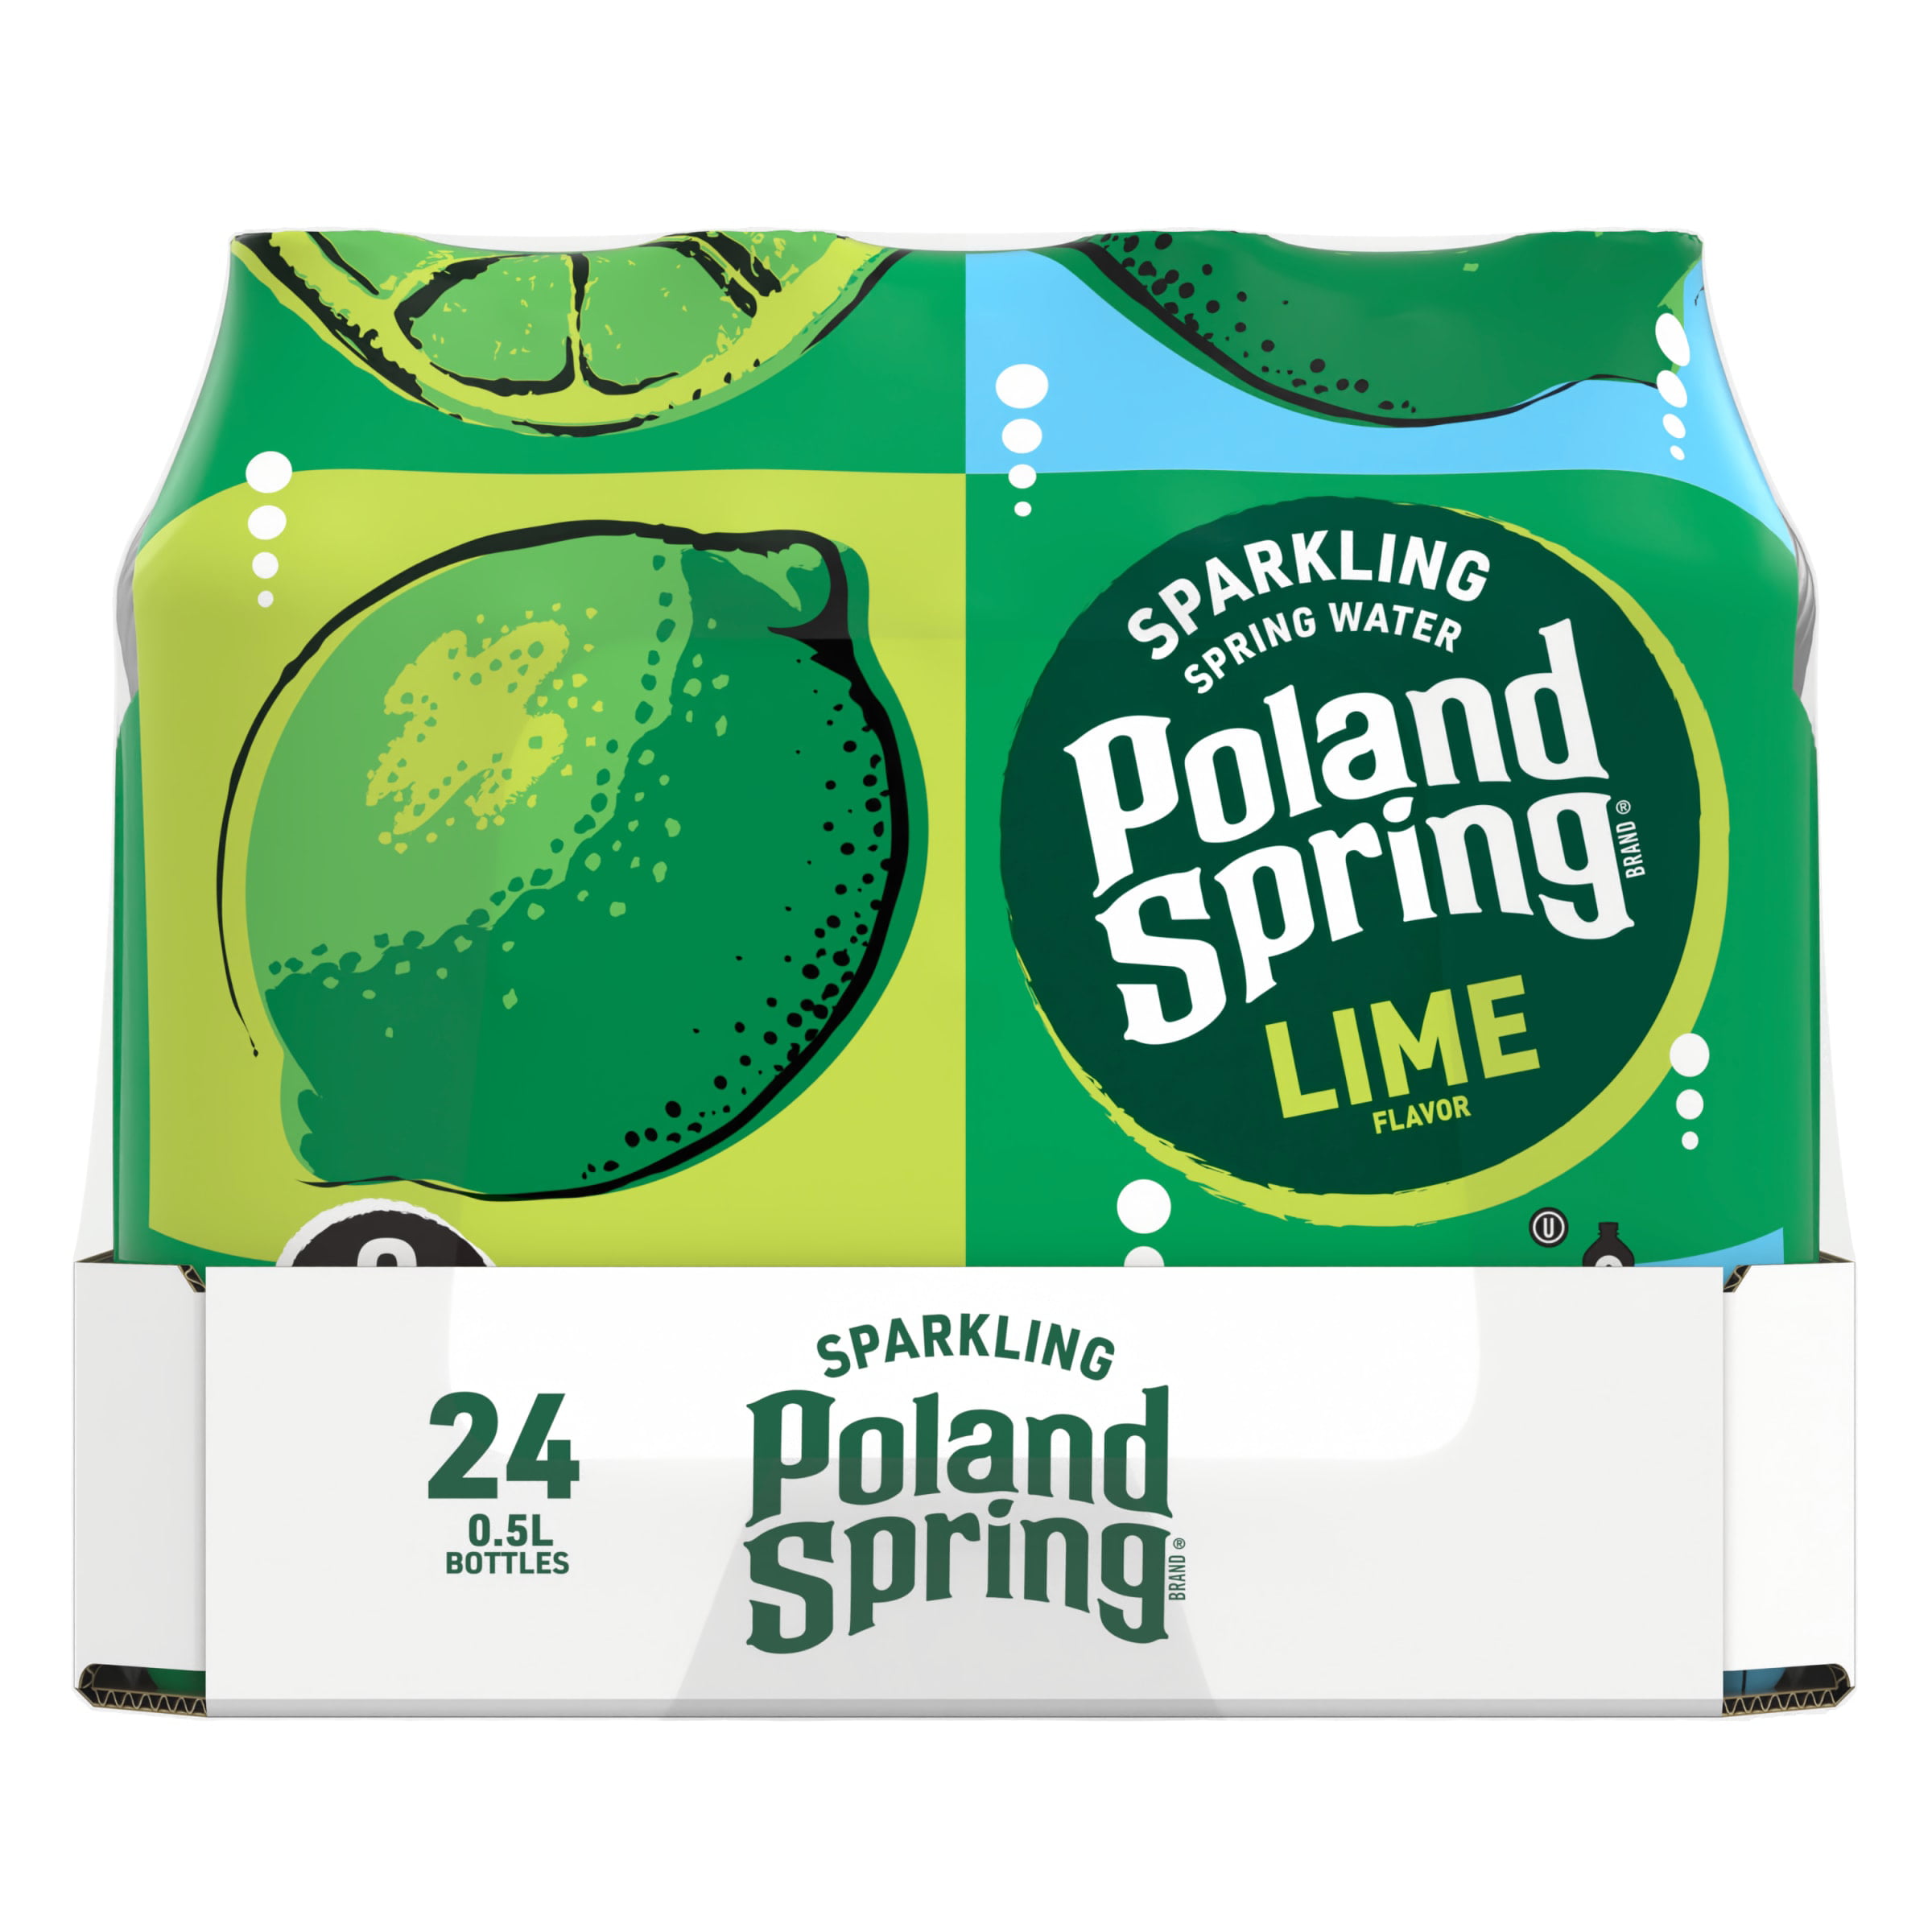 Poland Spring Sparkling Water, Zesty Lime, 16.9 oz. Bottles (24 Count) - 1